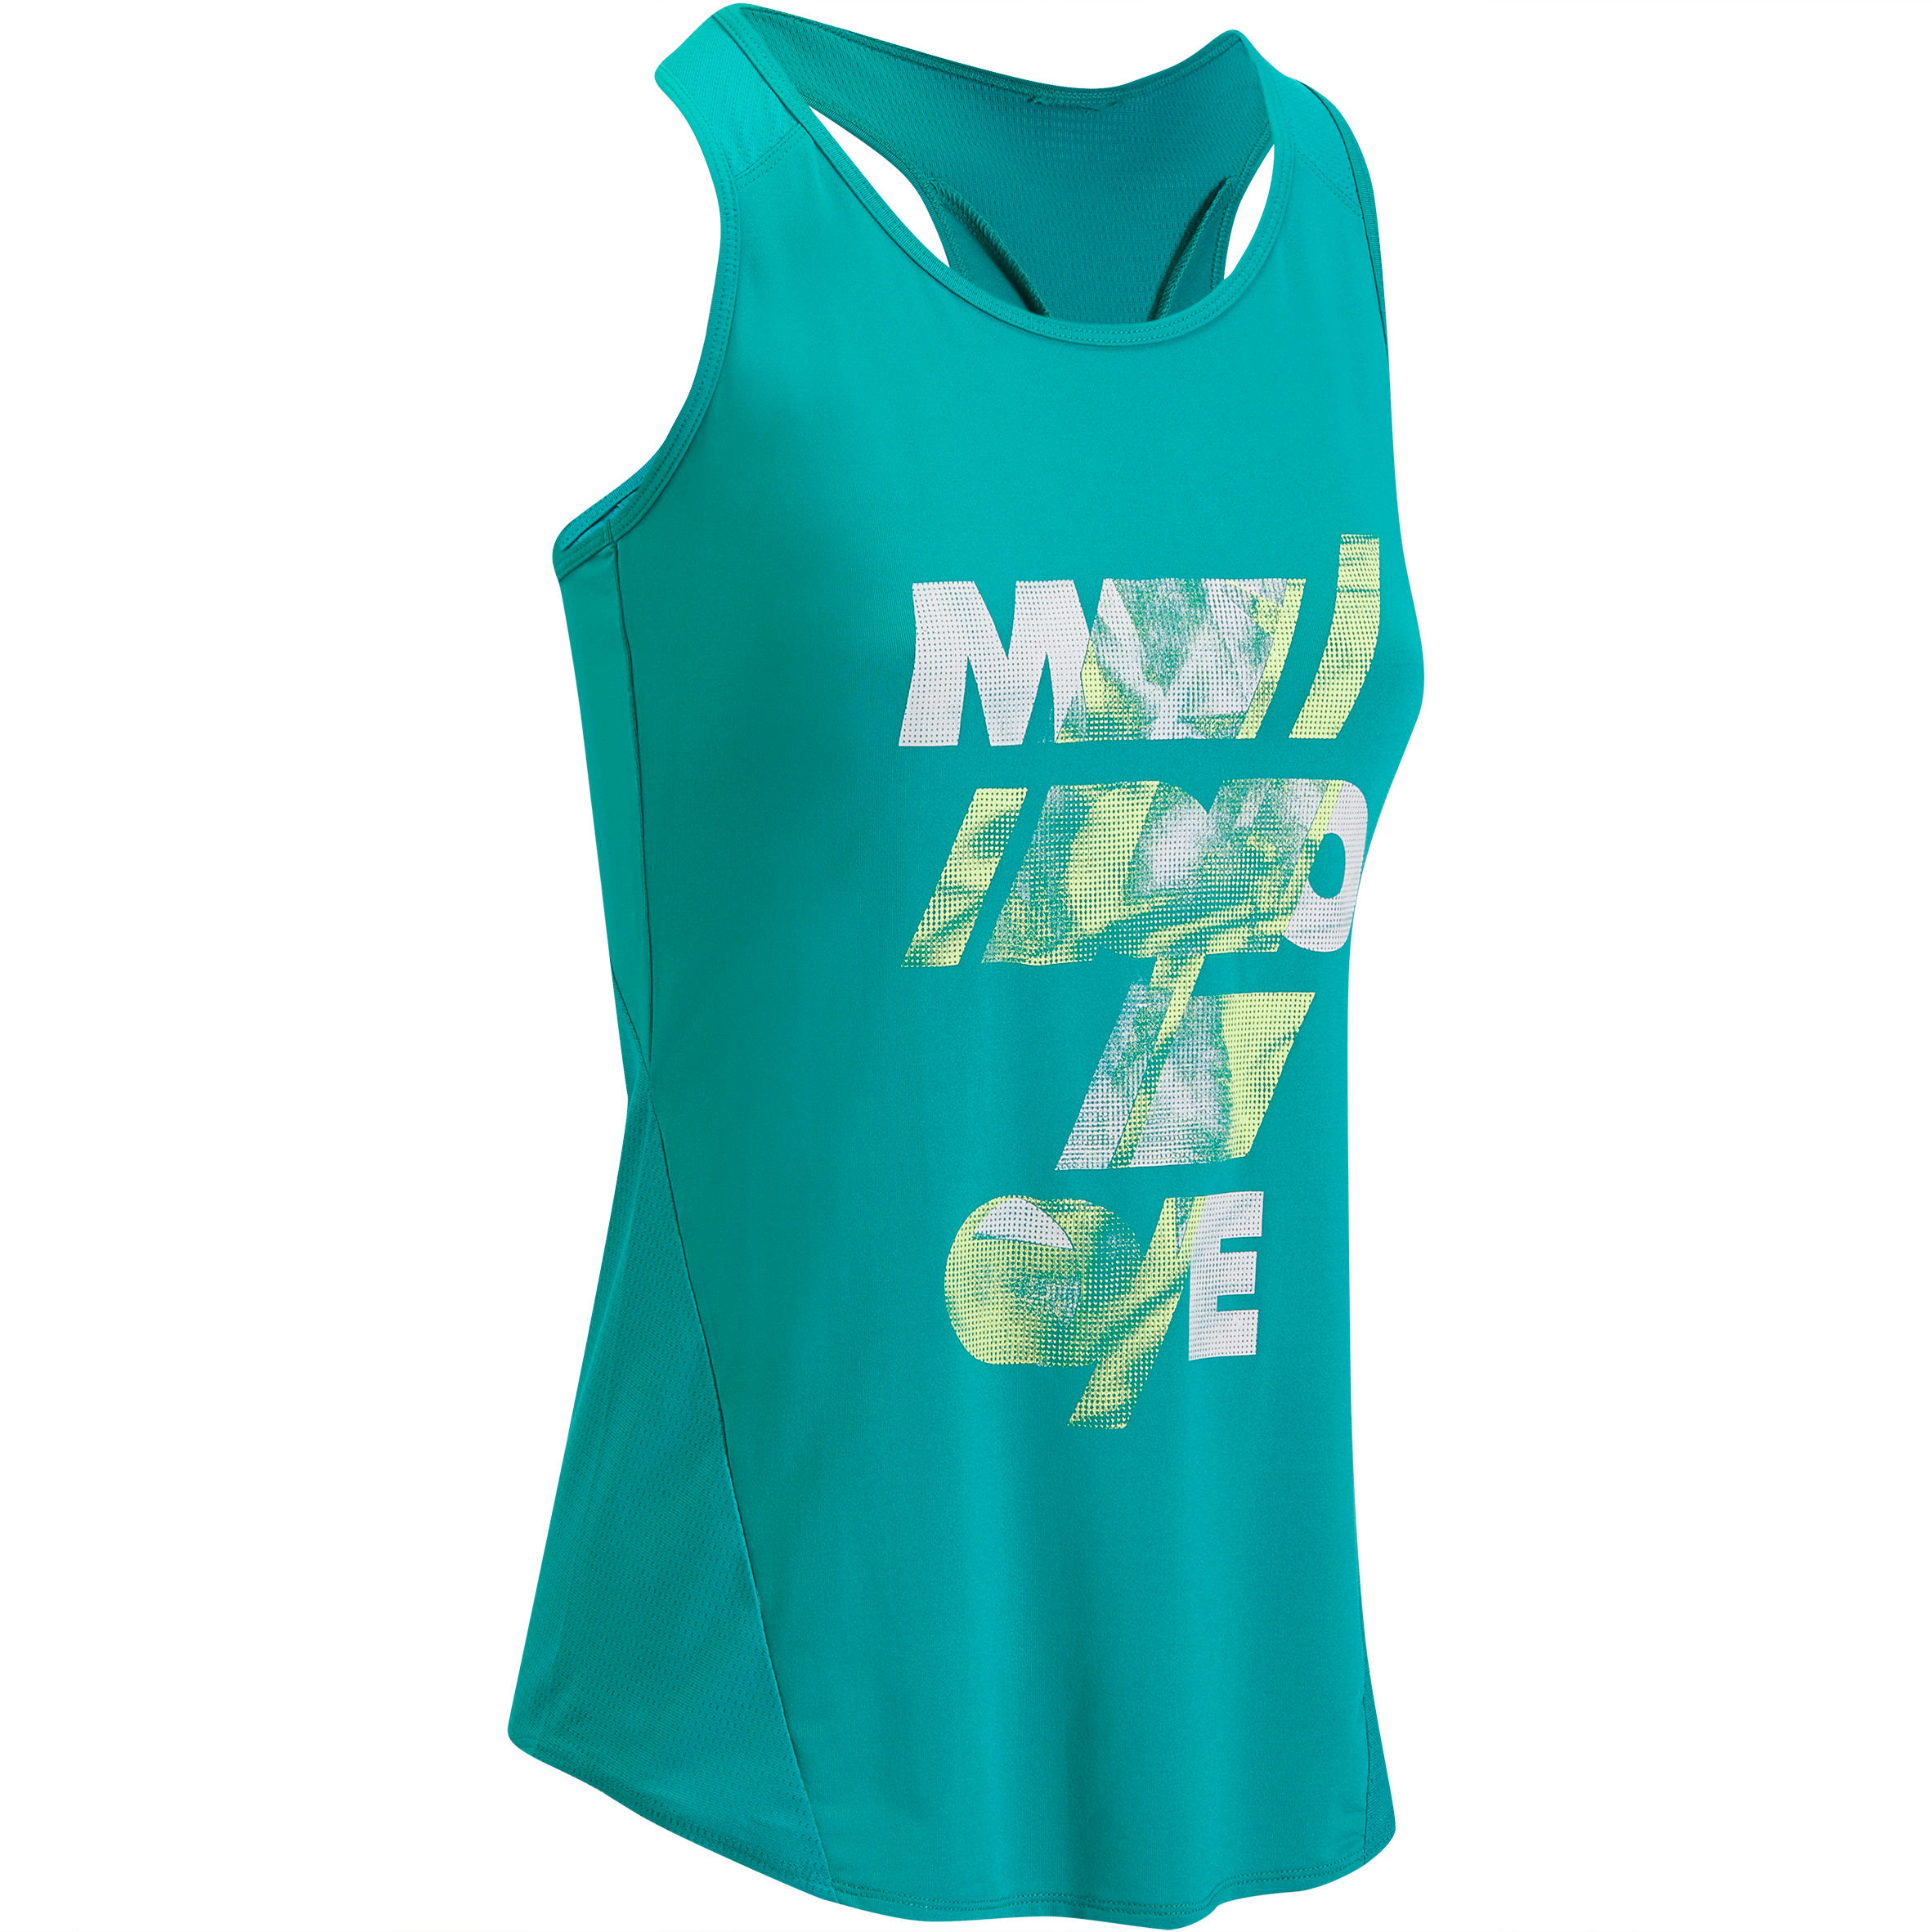 DOMYOS Energy Women's Cardio Fitness Tank Top - Blue/Green